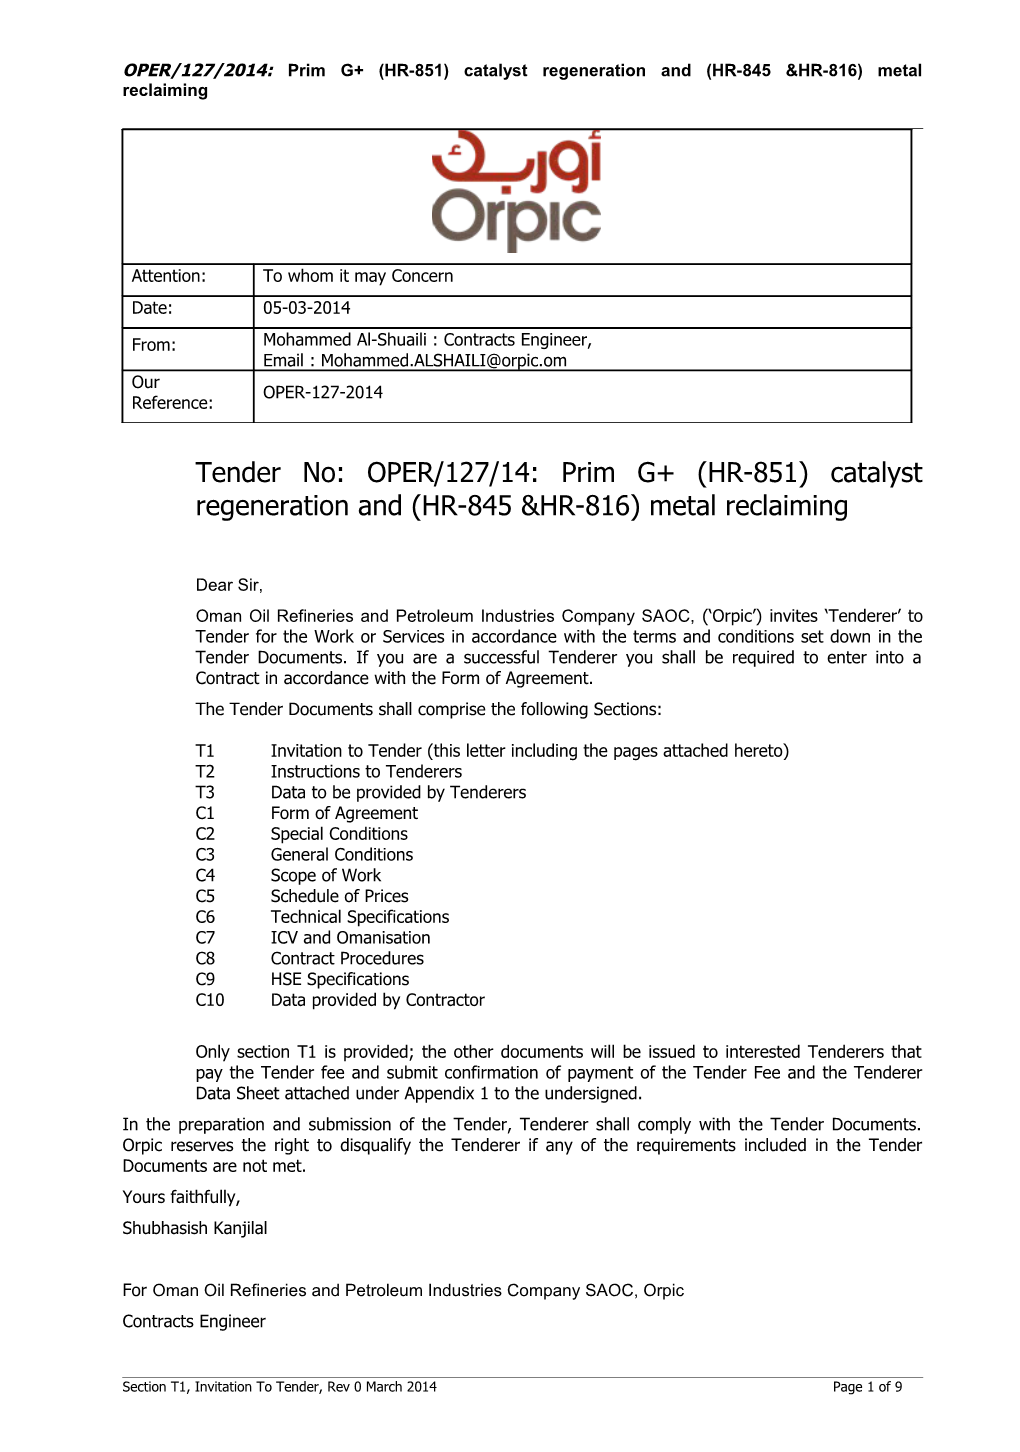 OPER/127/2014: Prim G+ (HR-851) Catalyst Regeneration and (HR-845 &HR-816) Metal Reclaiming